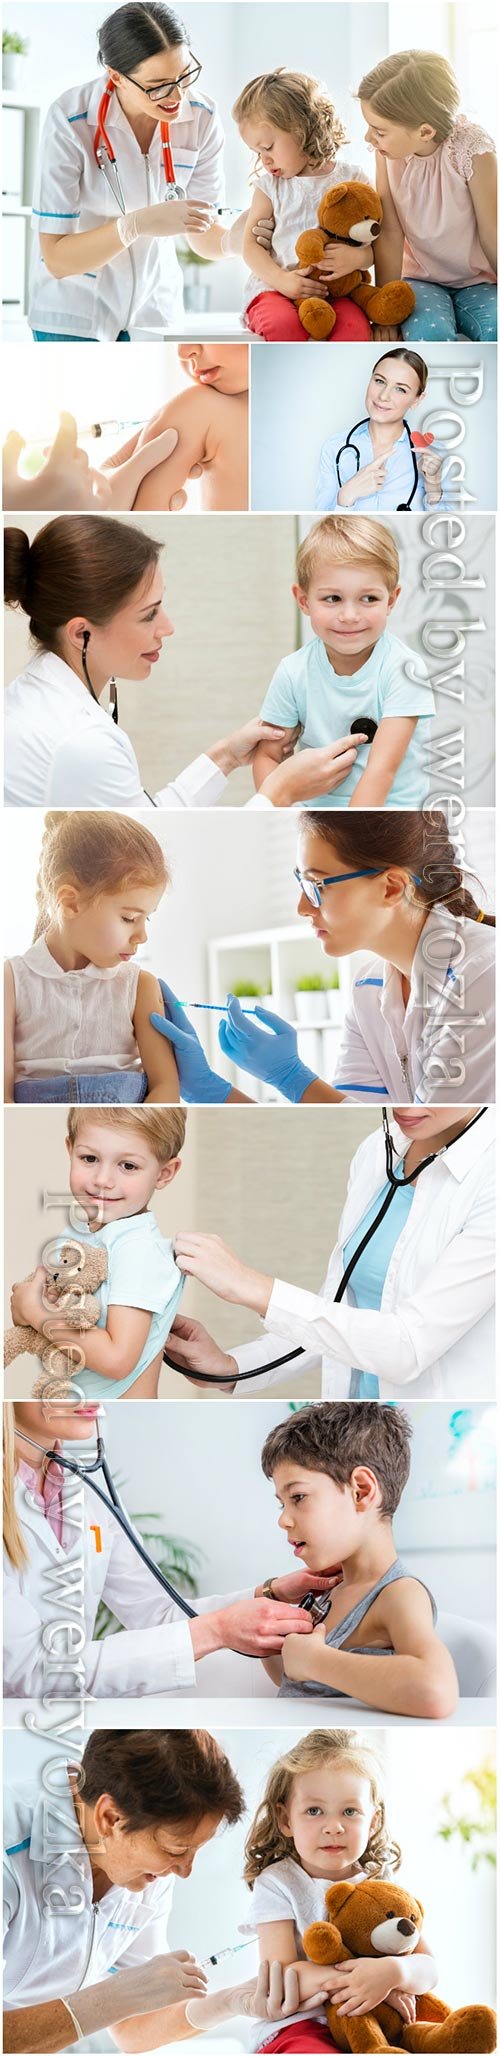 Children's doctor and children stock photo